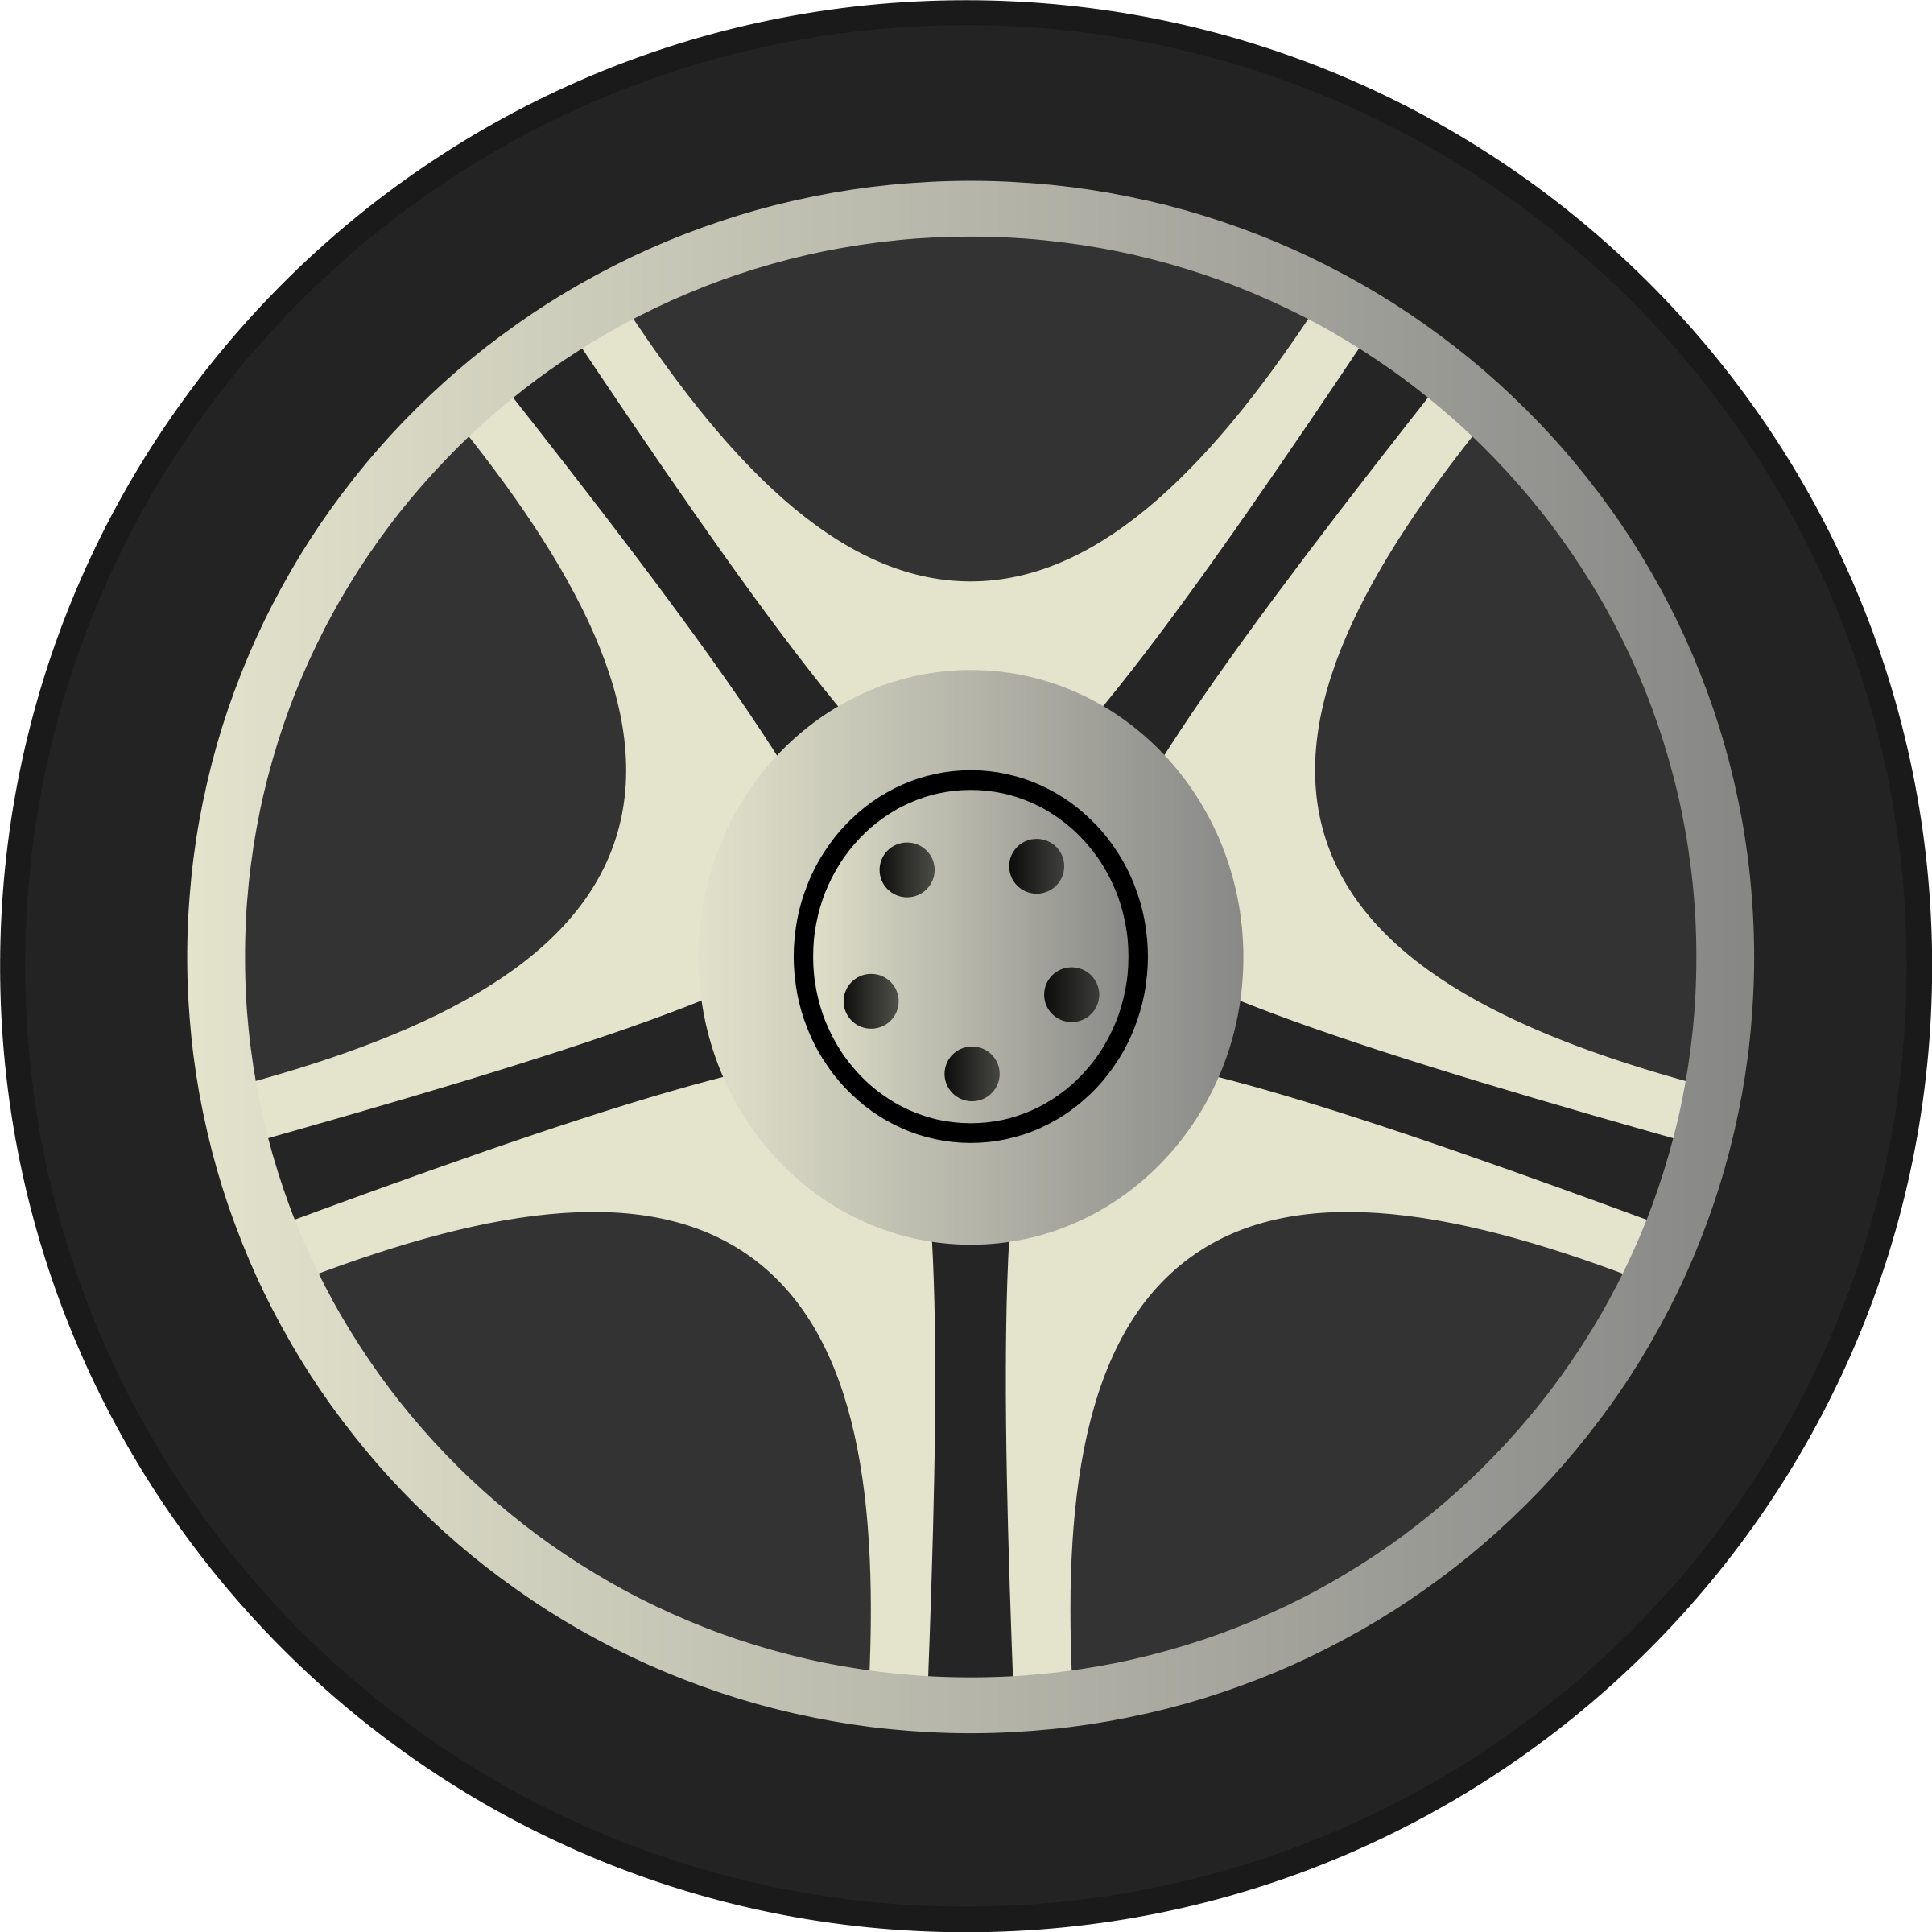 Car wheel tire images clipart